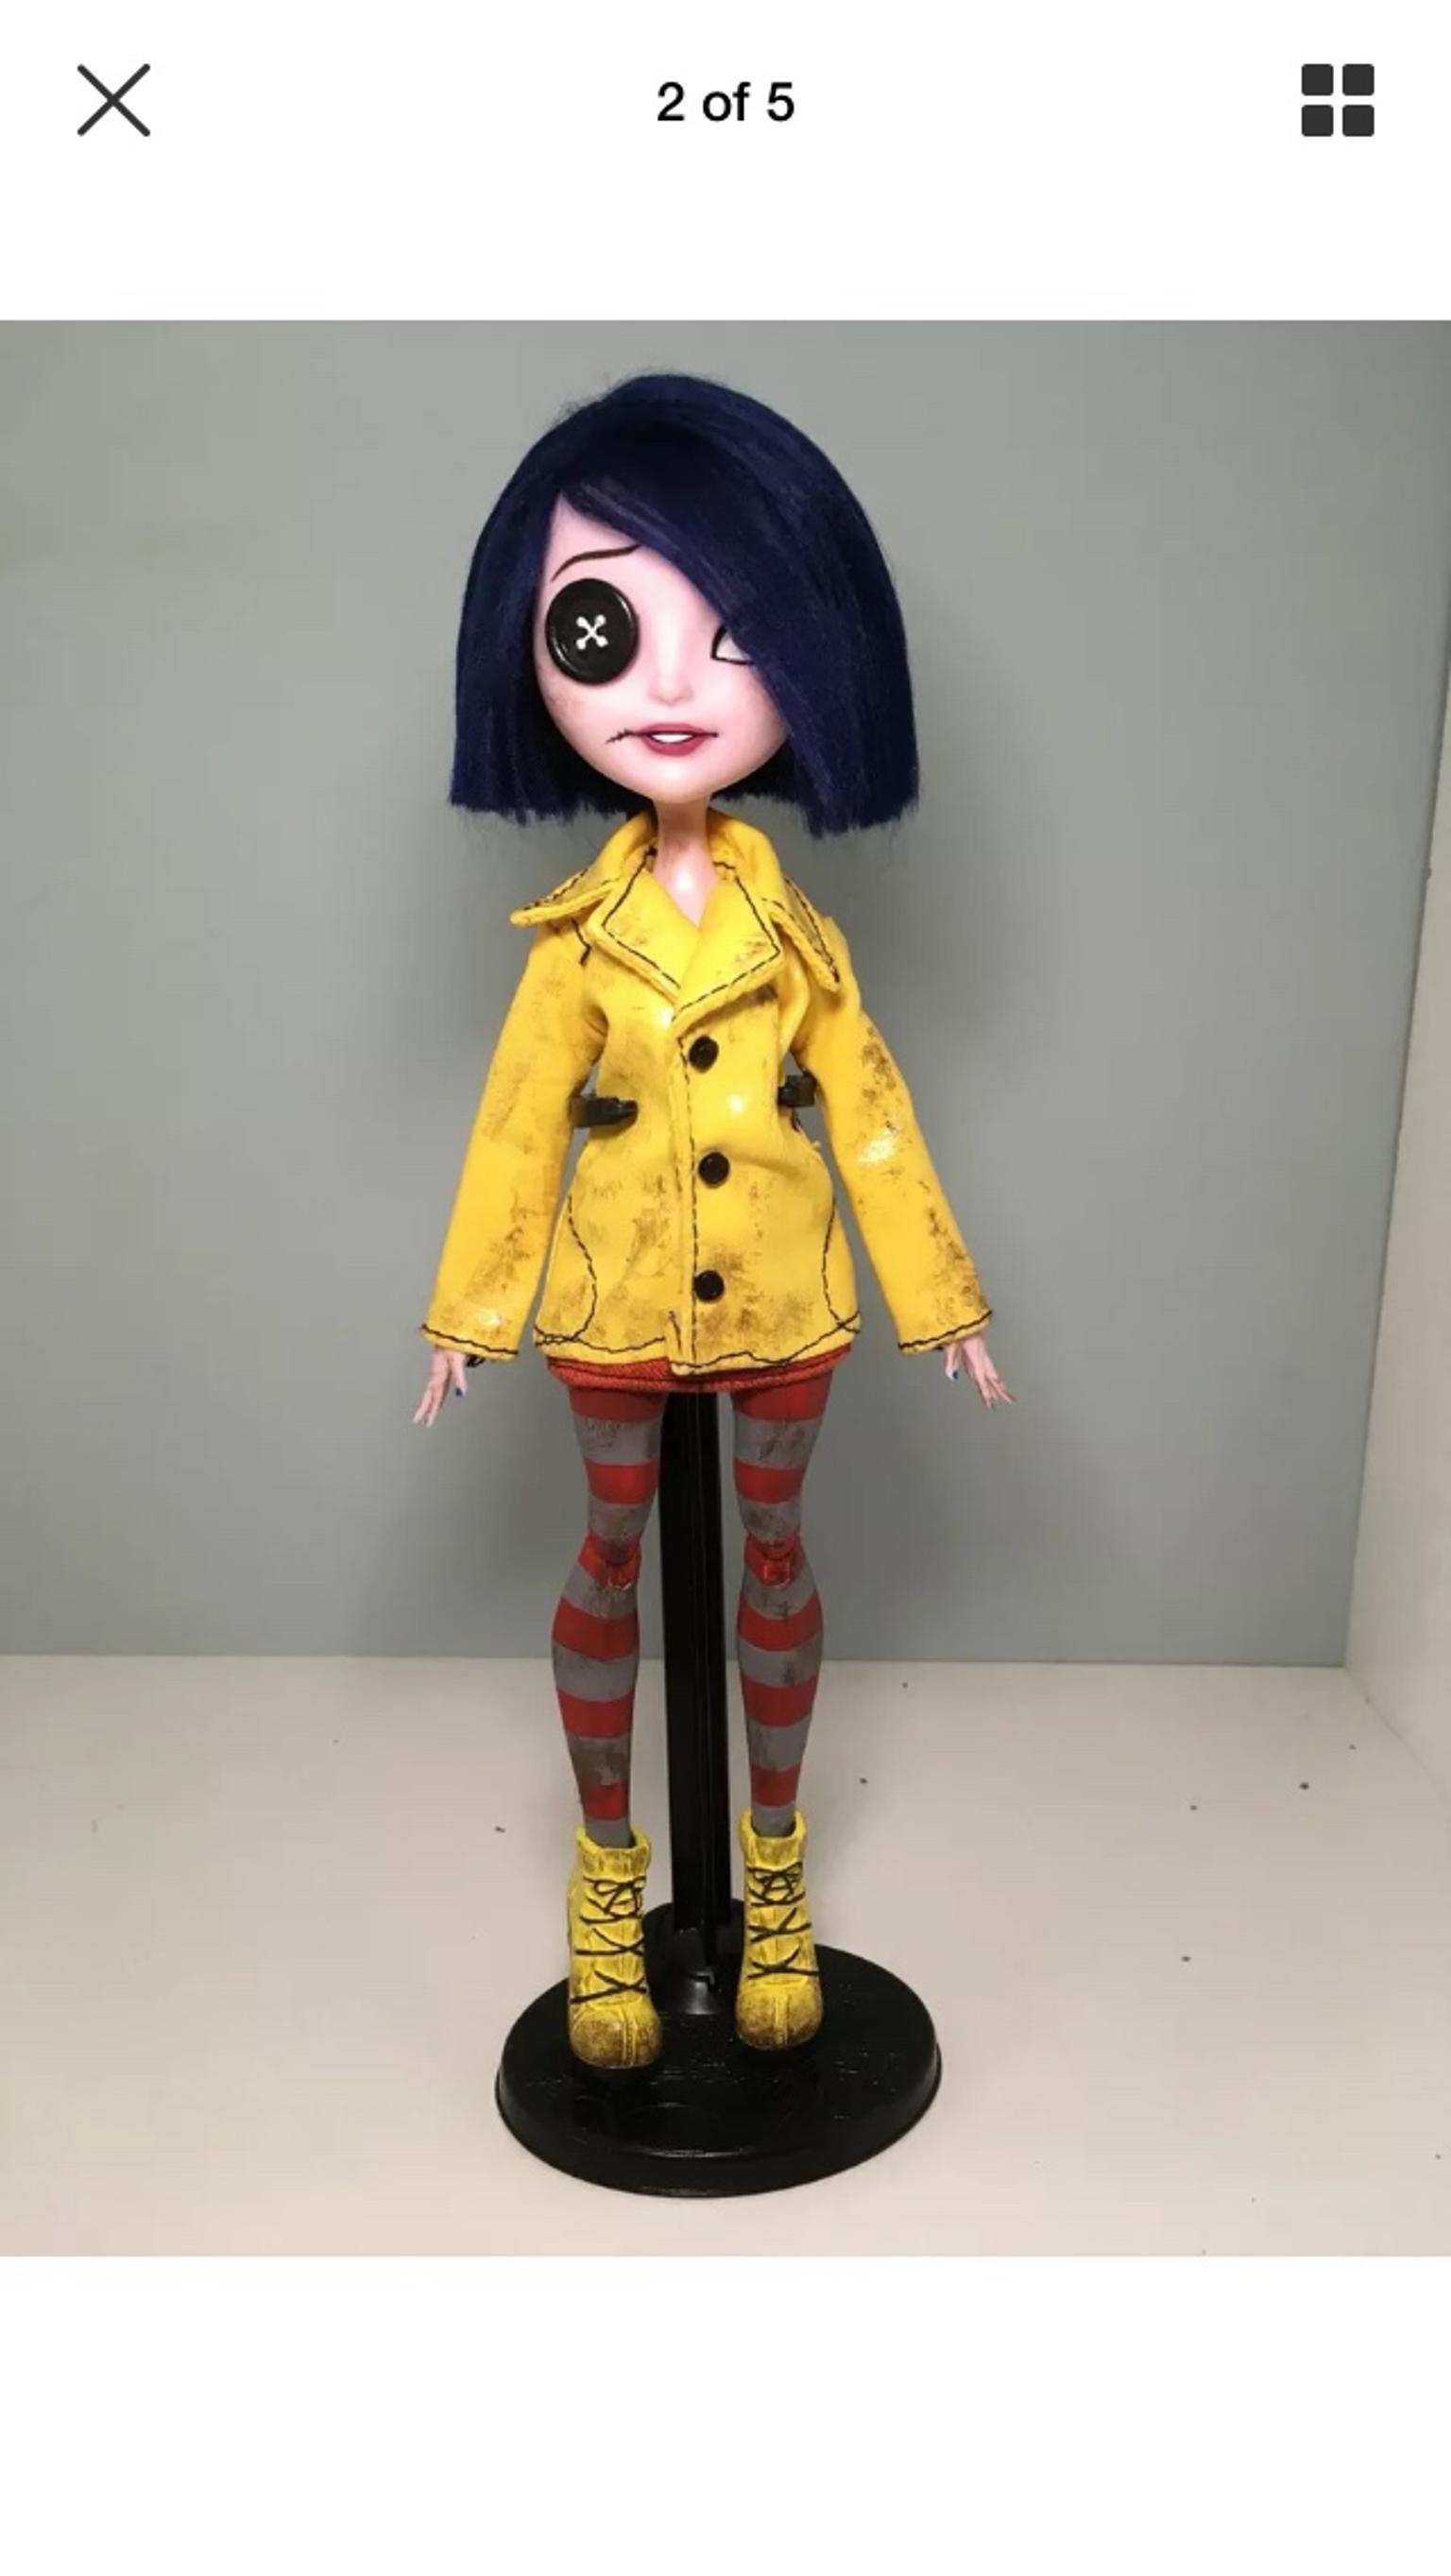 Coraline Doll Custom